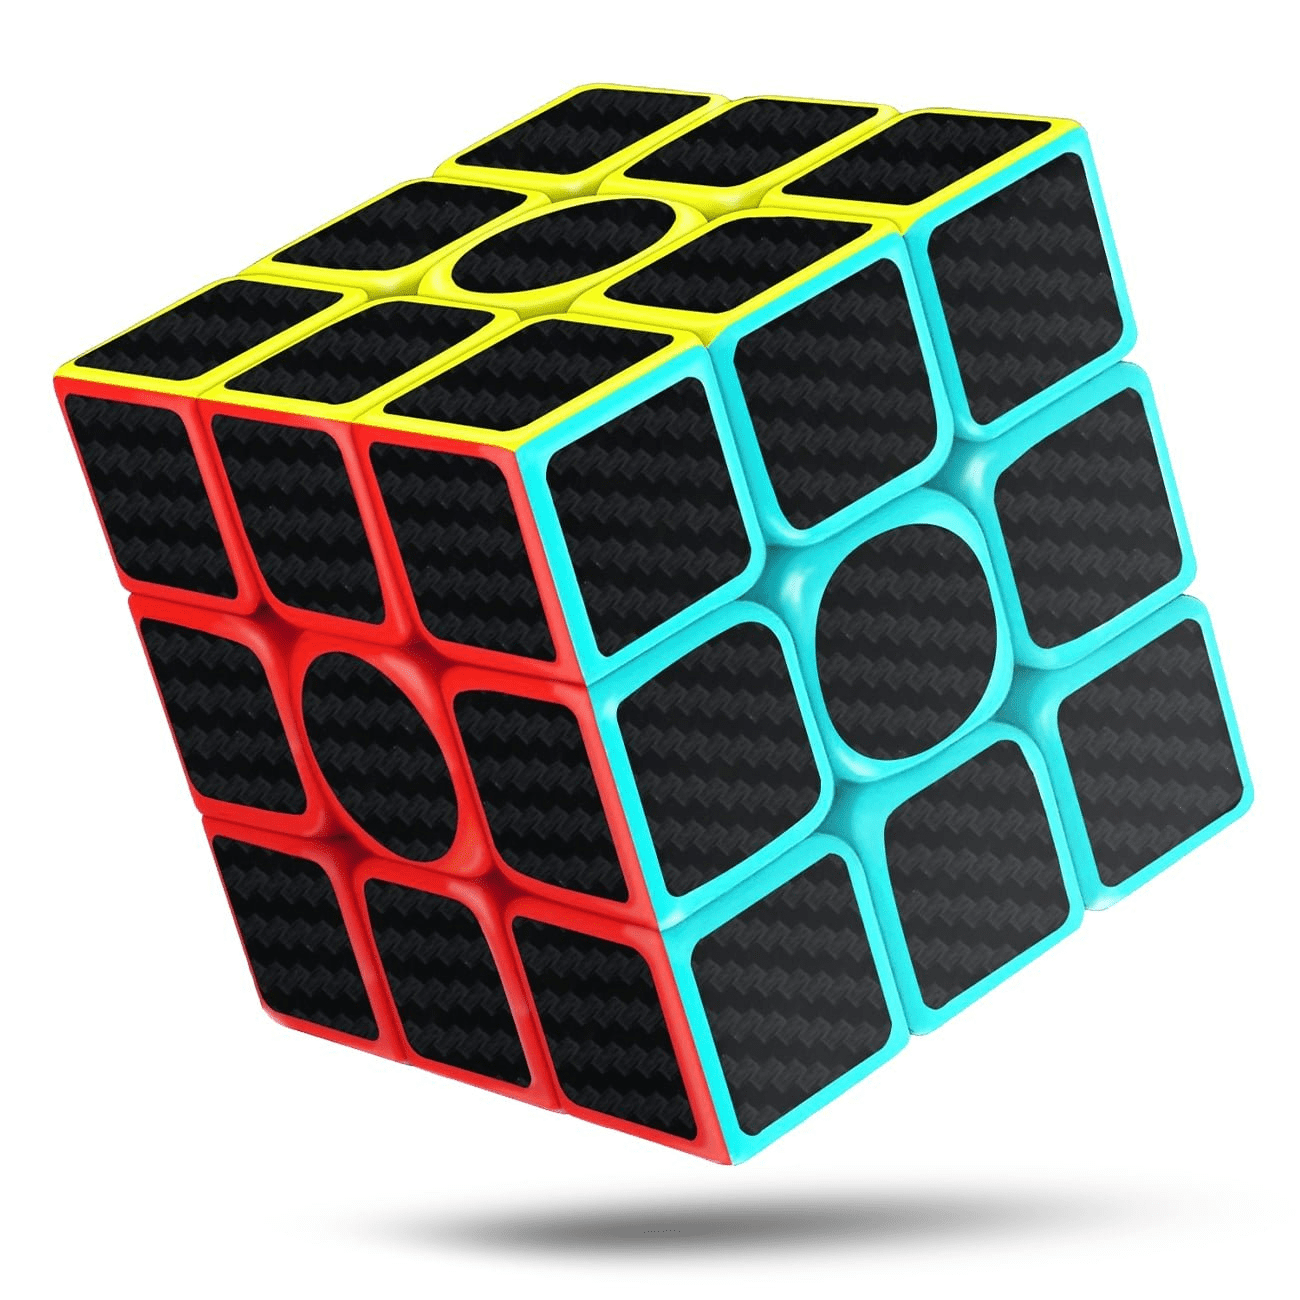 1x Moyu Mofangjiaoshi Carbon Fiber Magic Cube 2x2 3x3x3 4x4x4 5x5x5 Speed Cube 